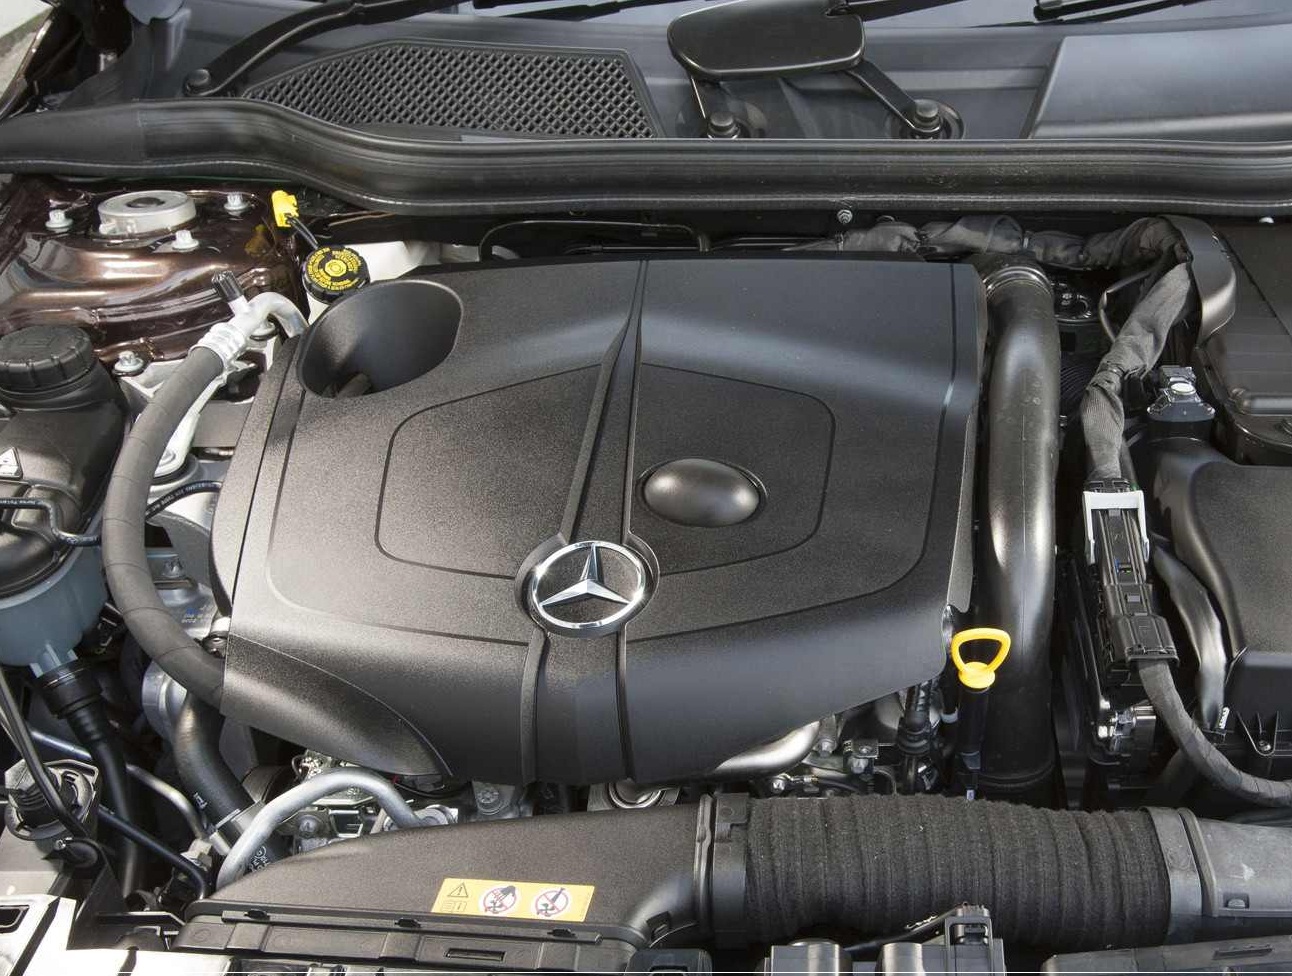 2018 Mercedes-Benz GLA-Class engine